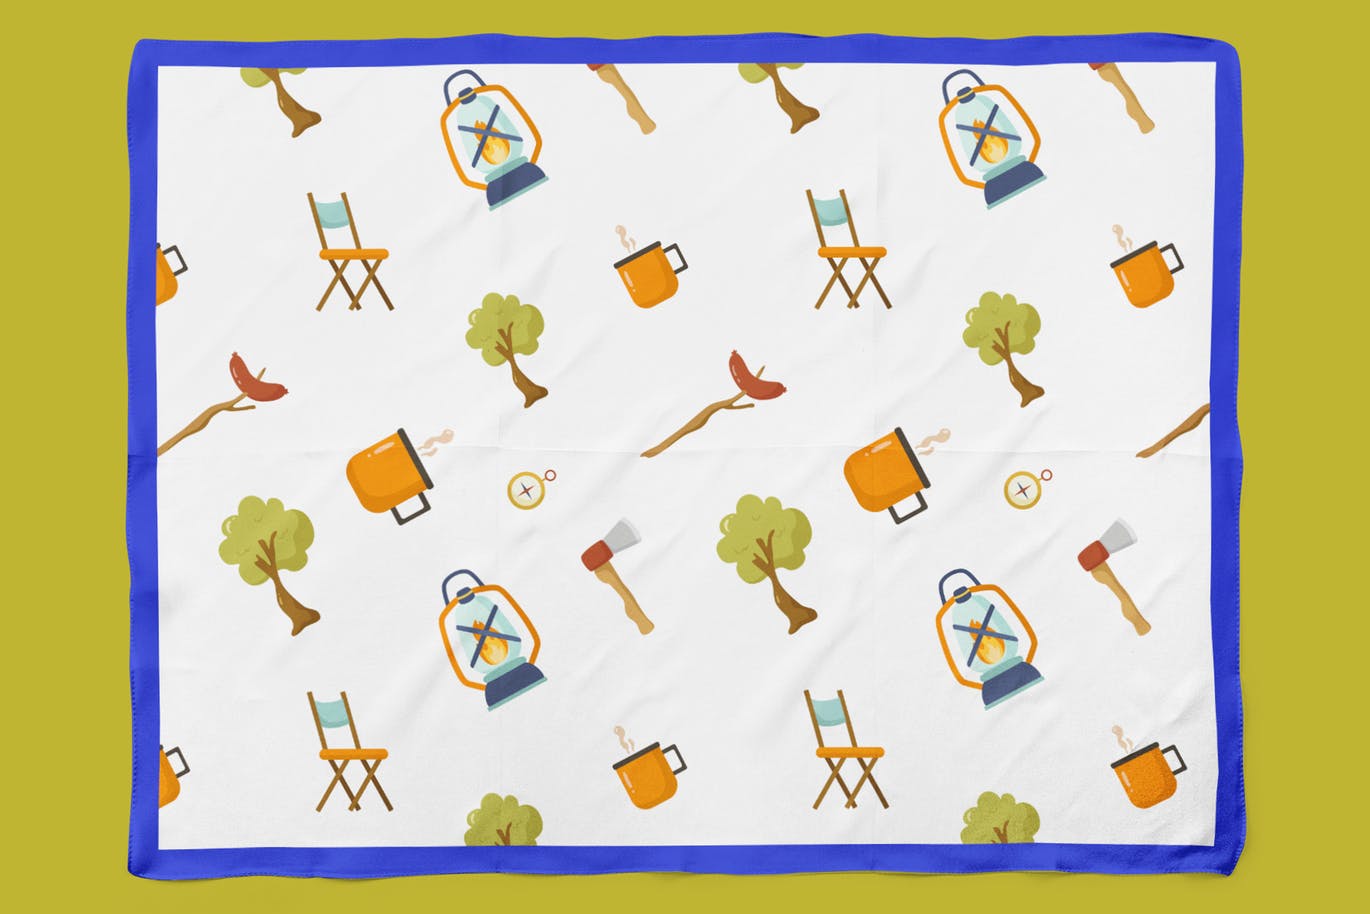 户外露营图案无缝背景素材 Outdoor Camping Seamless Patterns插图(5)